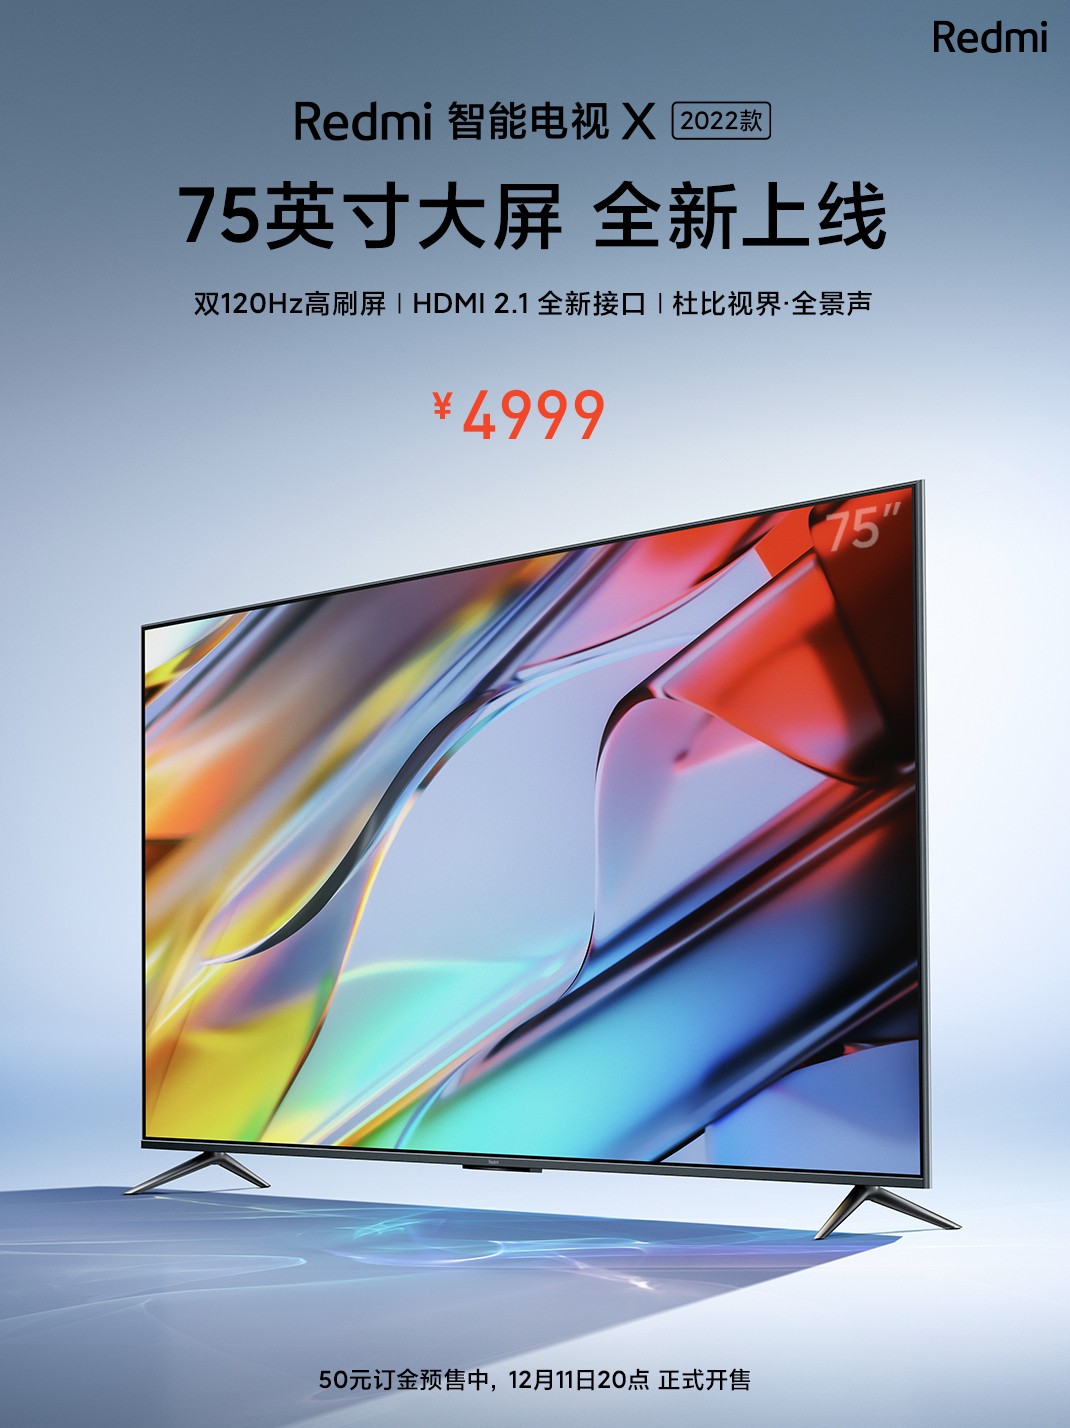 Redmi智能电视X 2022款上线：75英寸 售价4999元